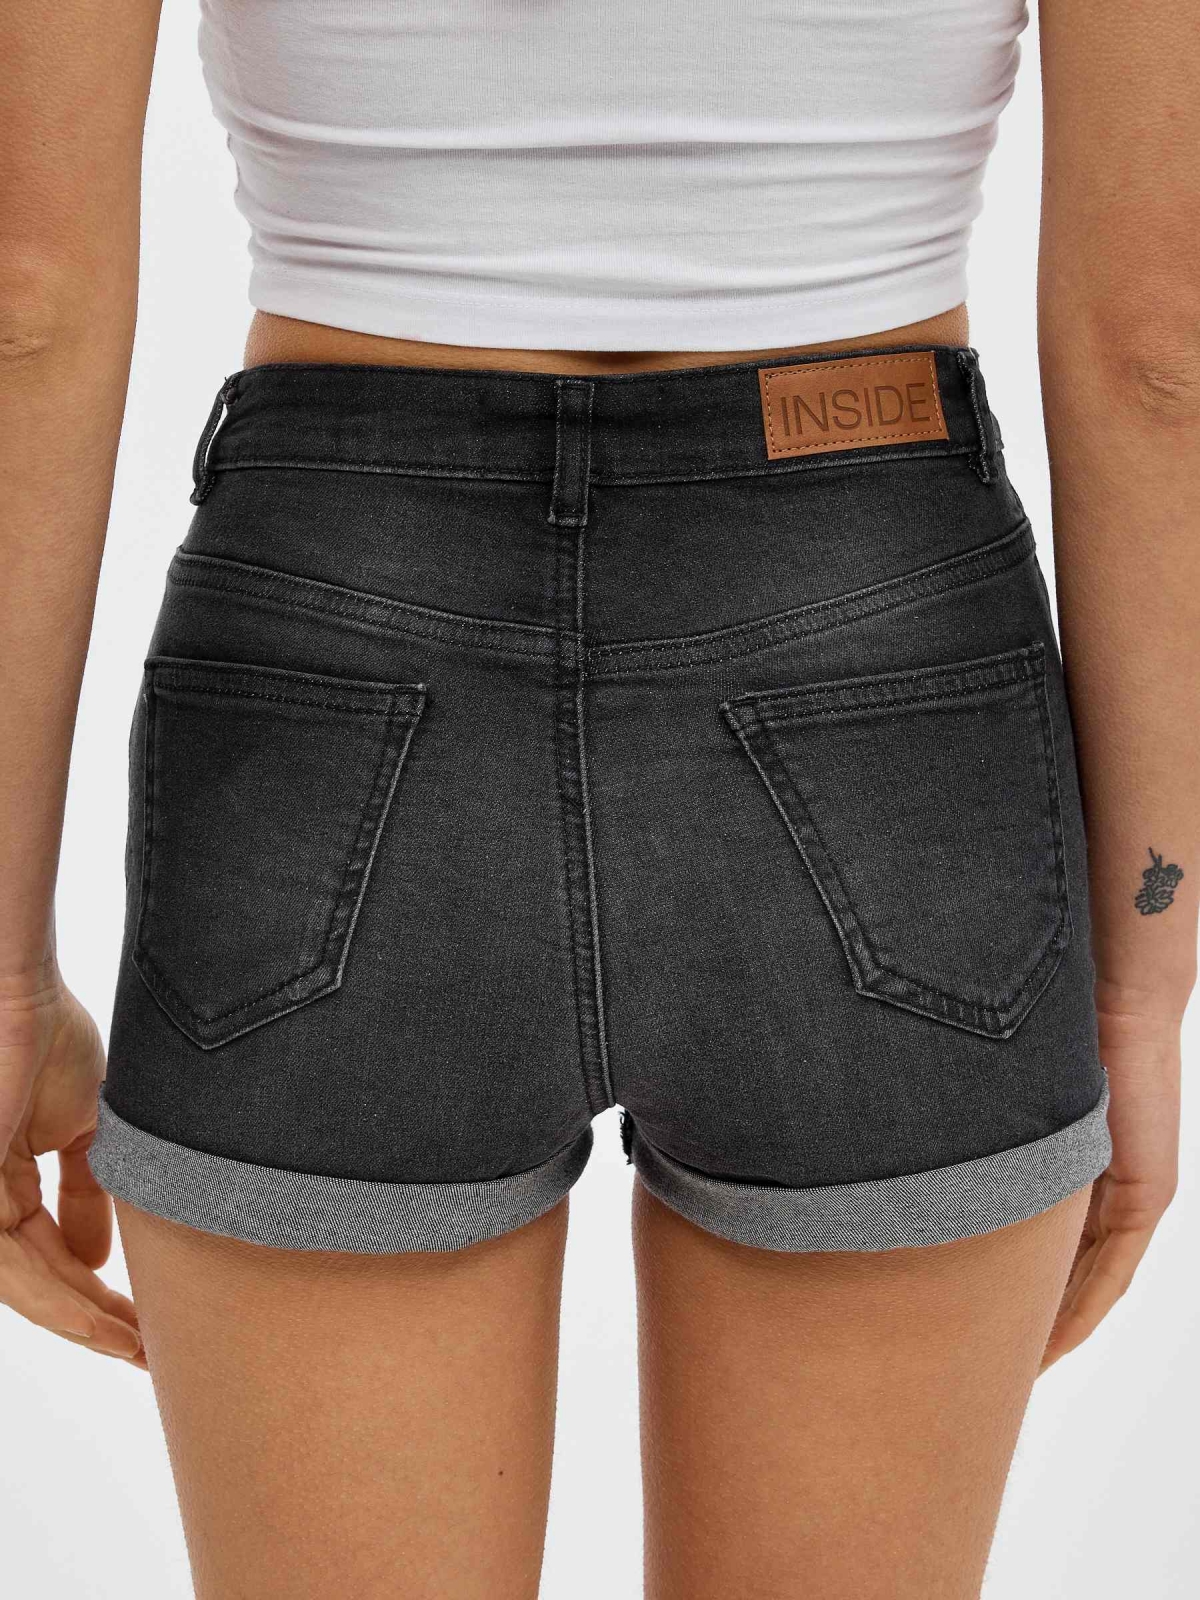 Buttoned denim shorts black detail view